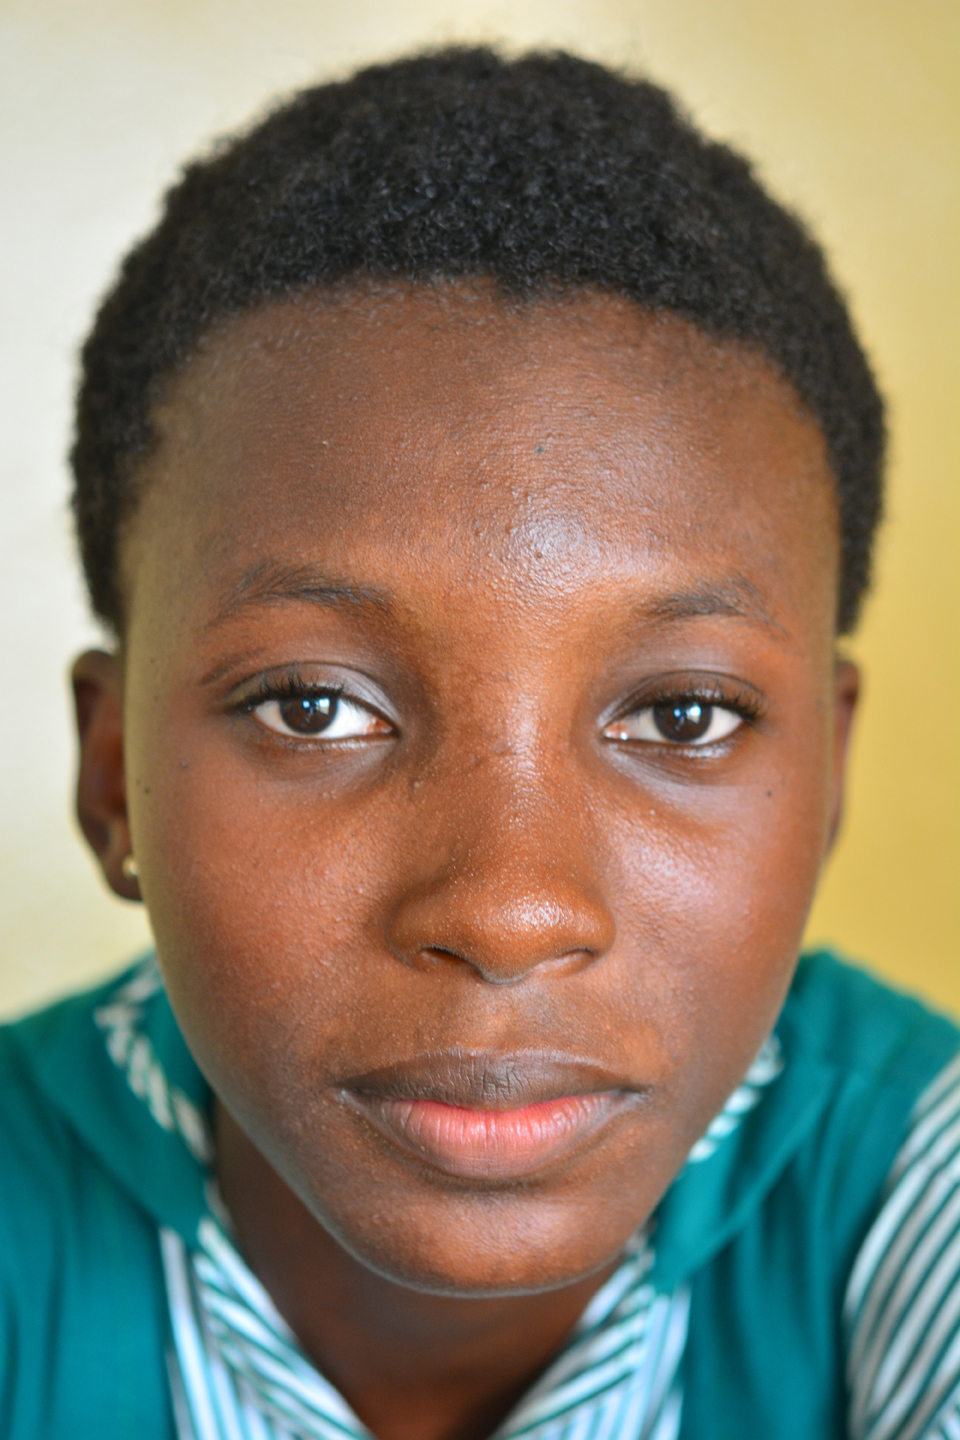 Skin Bleaching in Ghana: The Next Generation? | Pulitzer Center